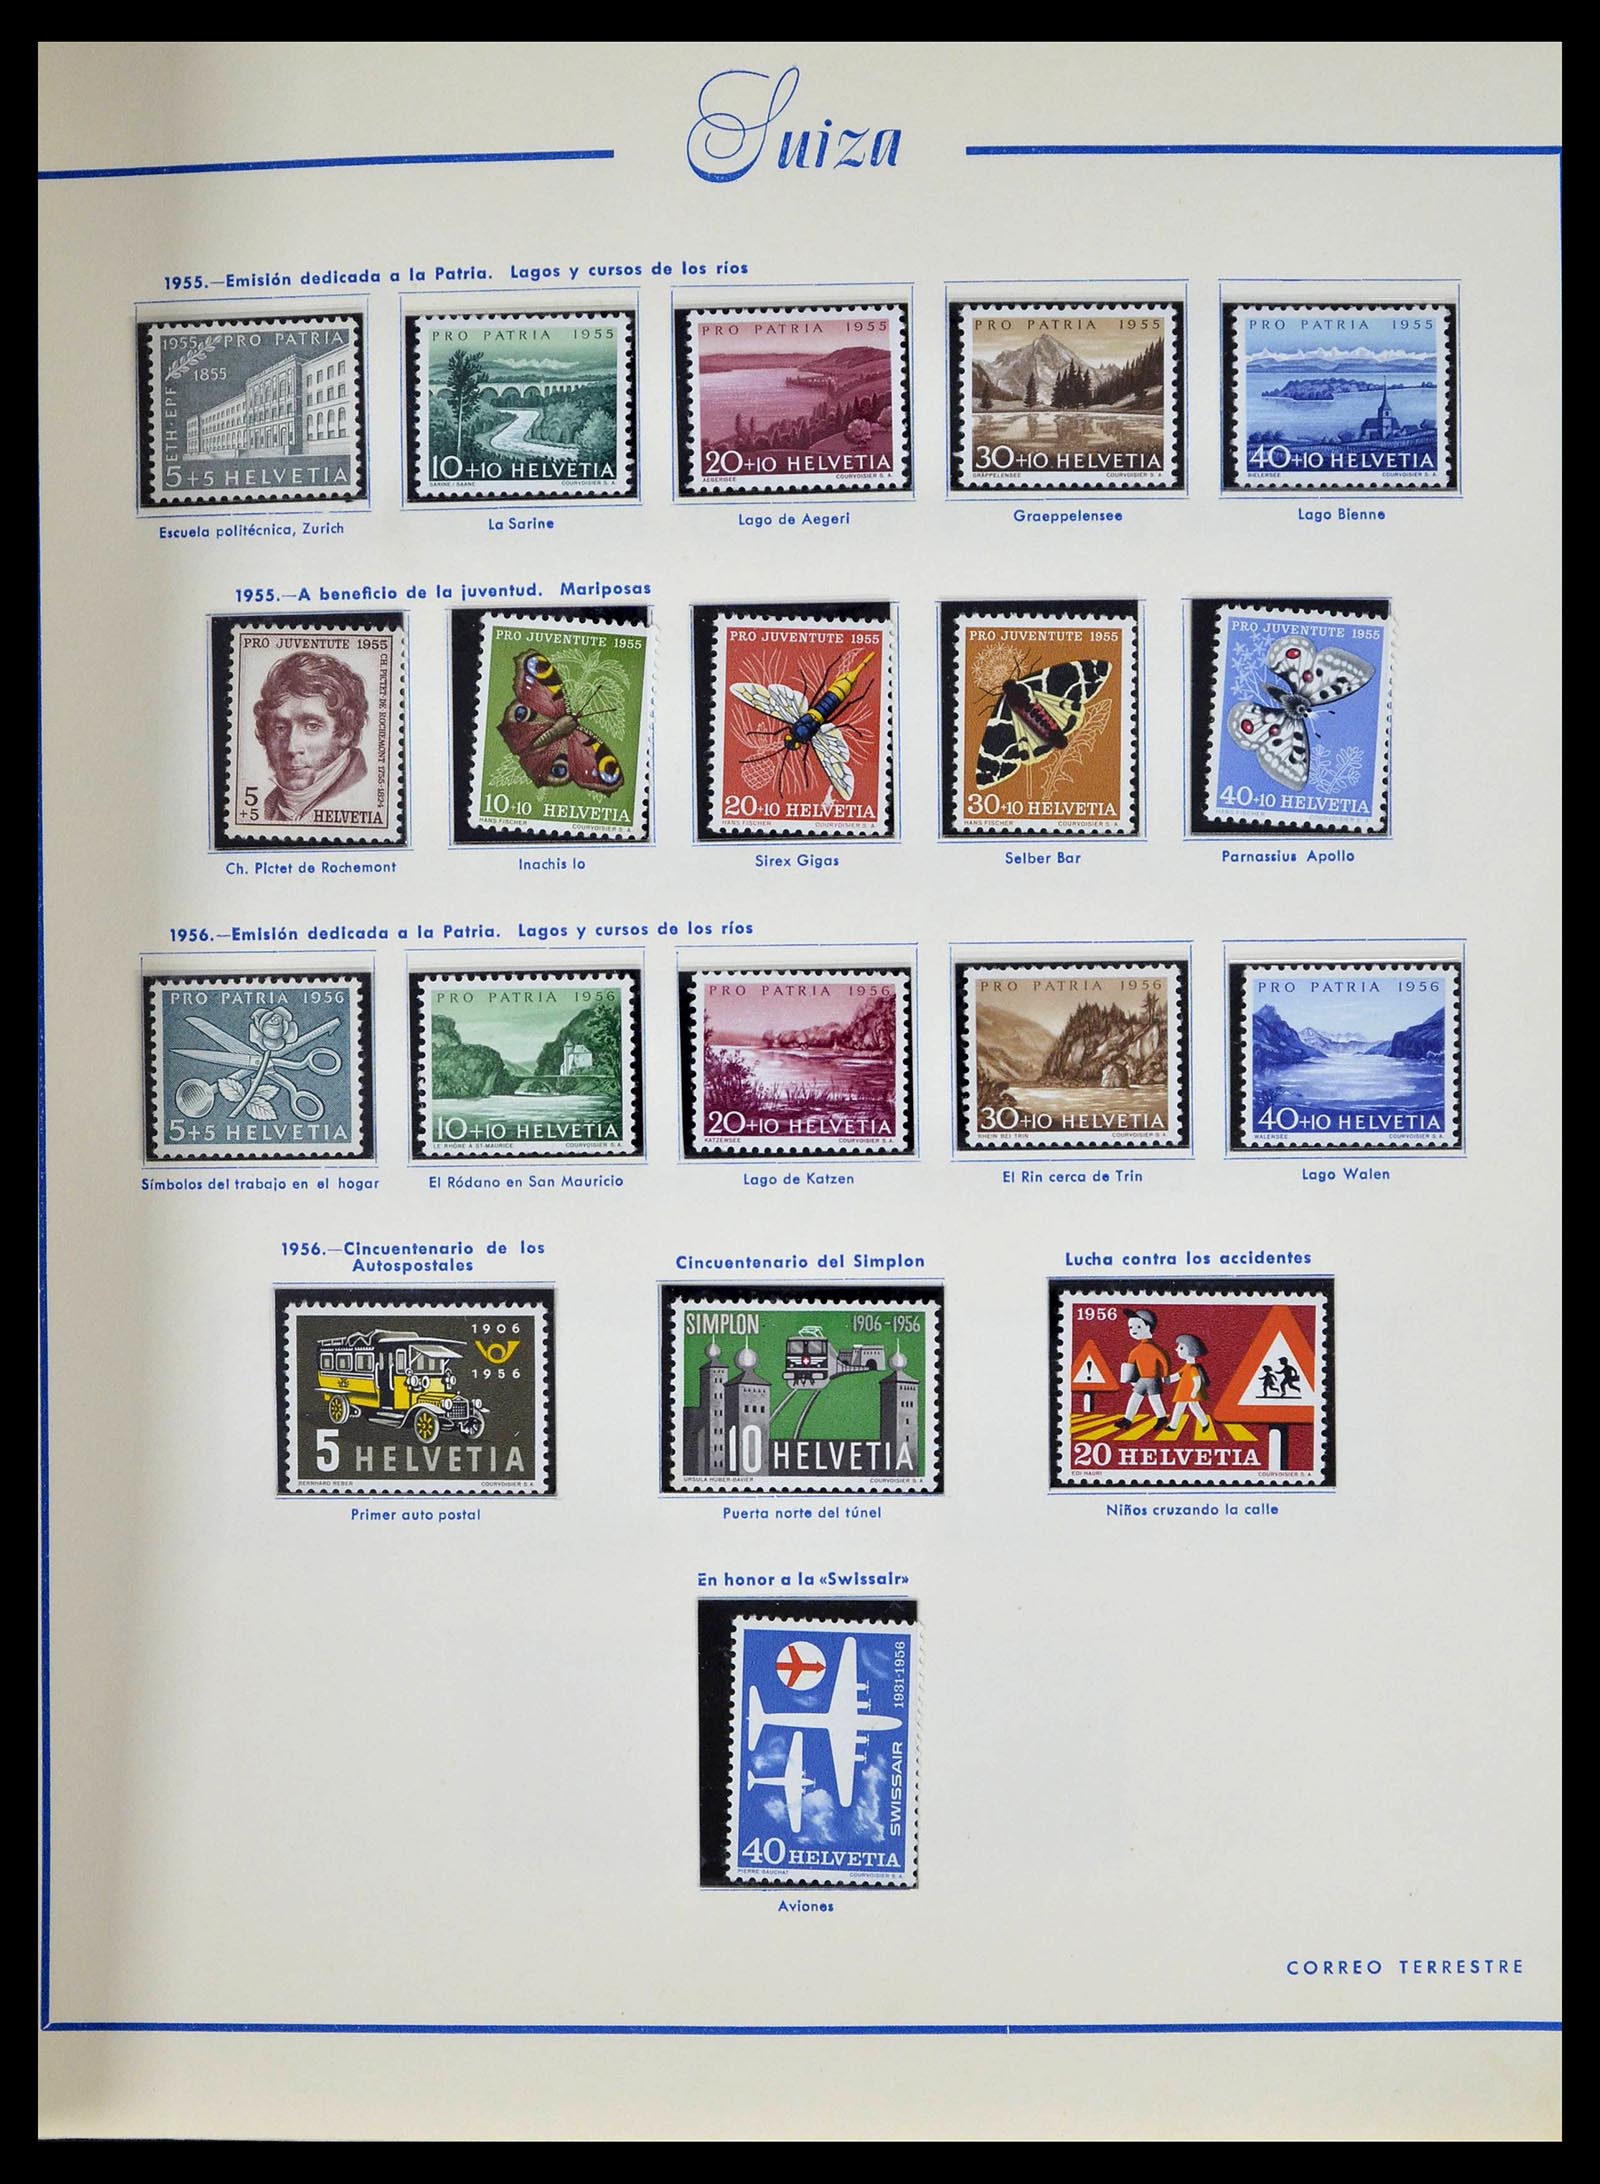 39217 0034 - Stamp collection 39217 Switzerland 1850-1986.